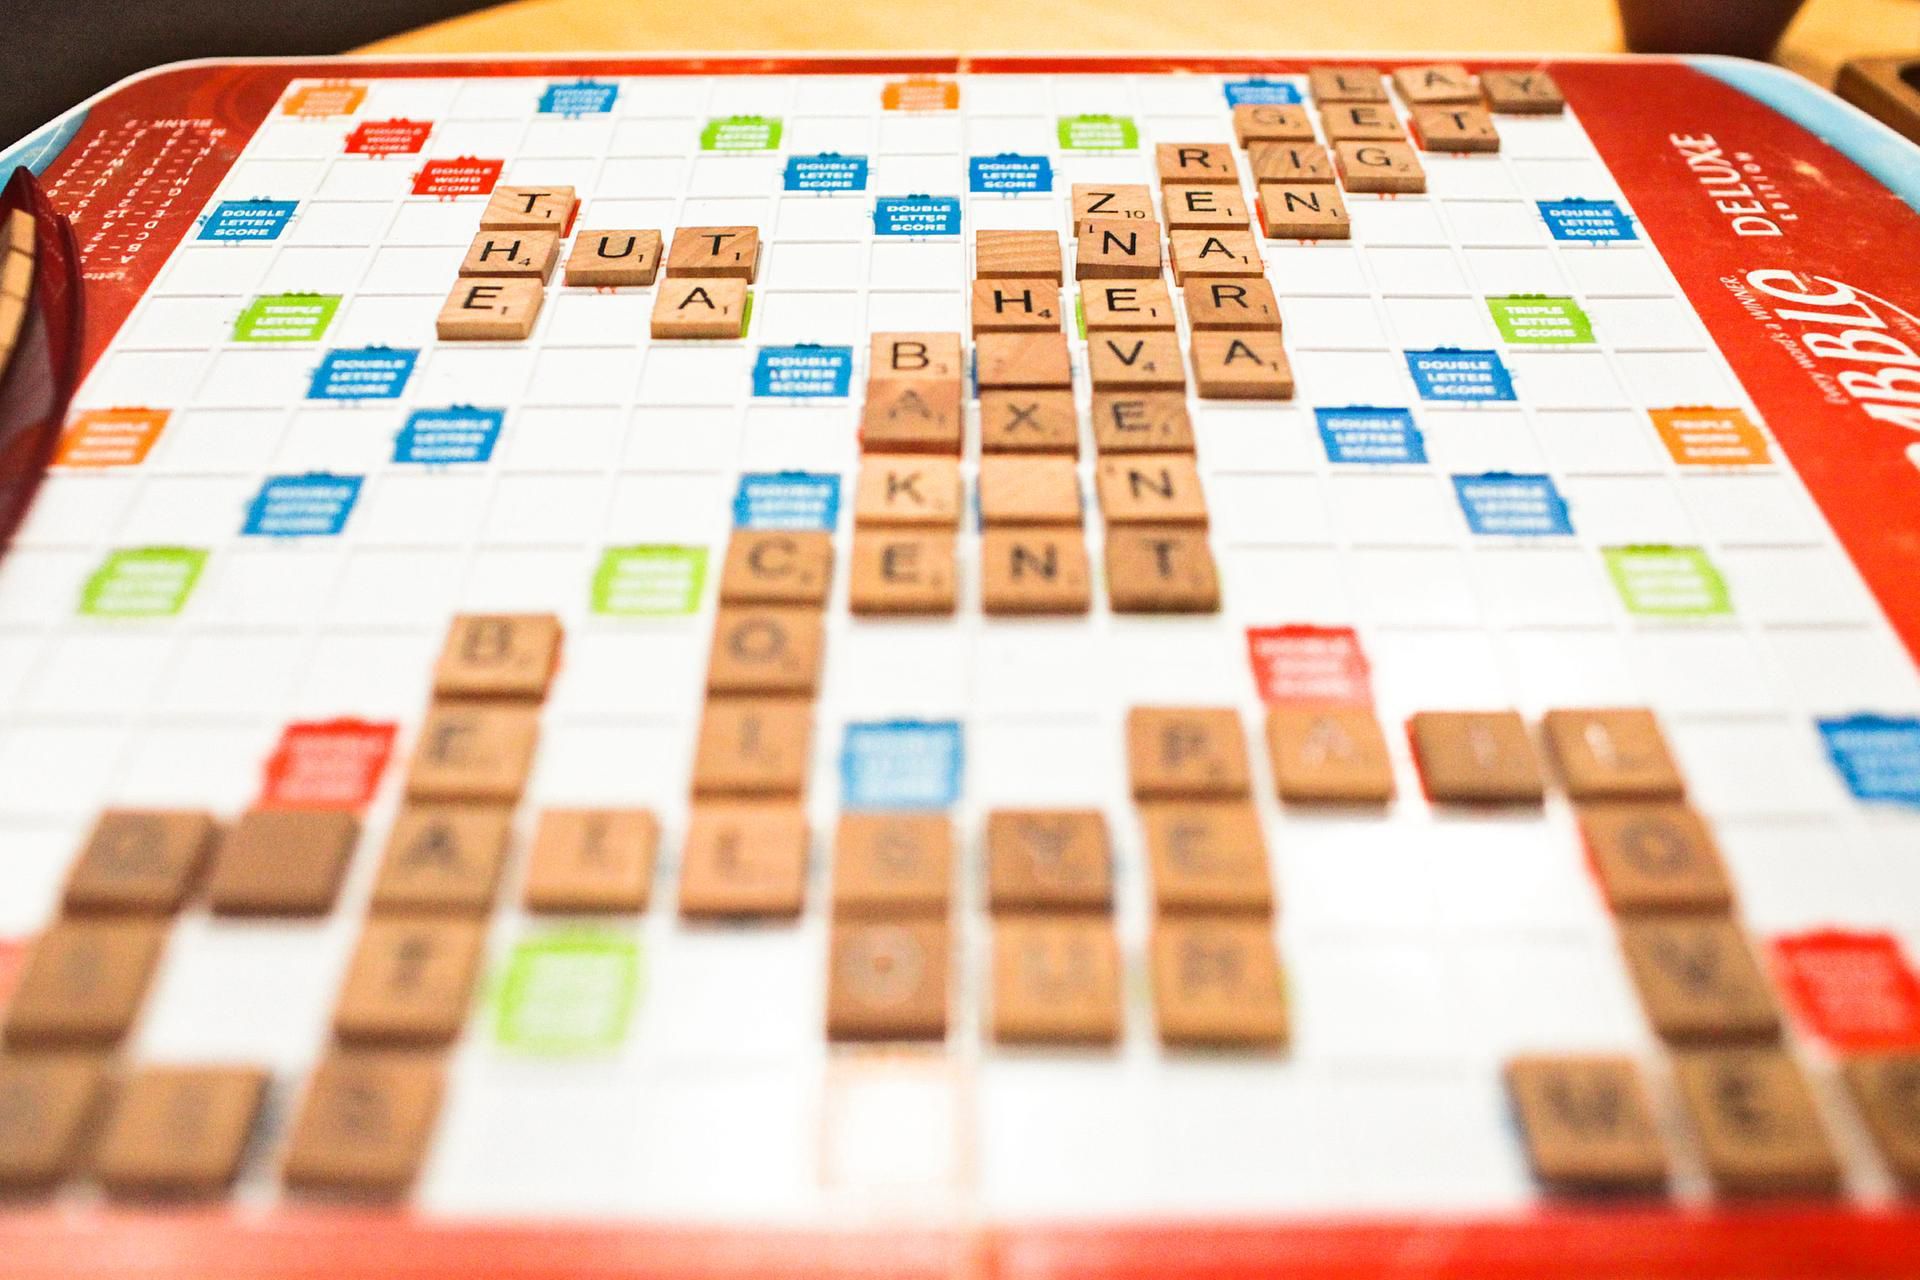 Scrabble Original - Board Game English: Buy Online at Best Price in UAE 